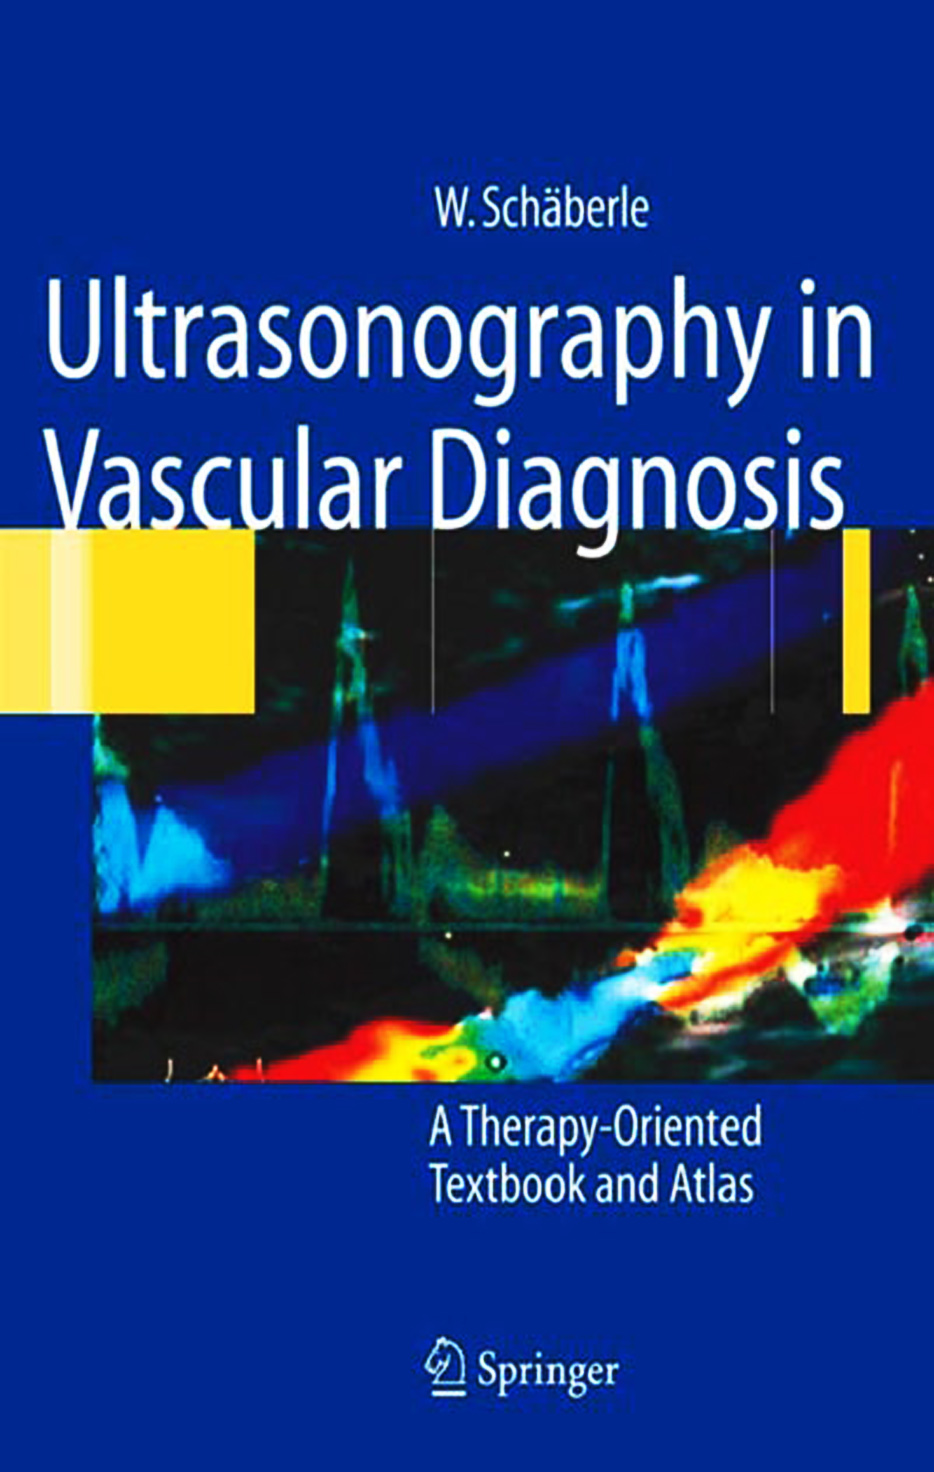 [PDF] Ultrasonography in Vascular Diagnosis 2005